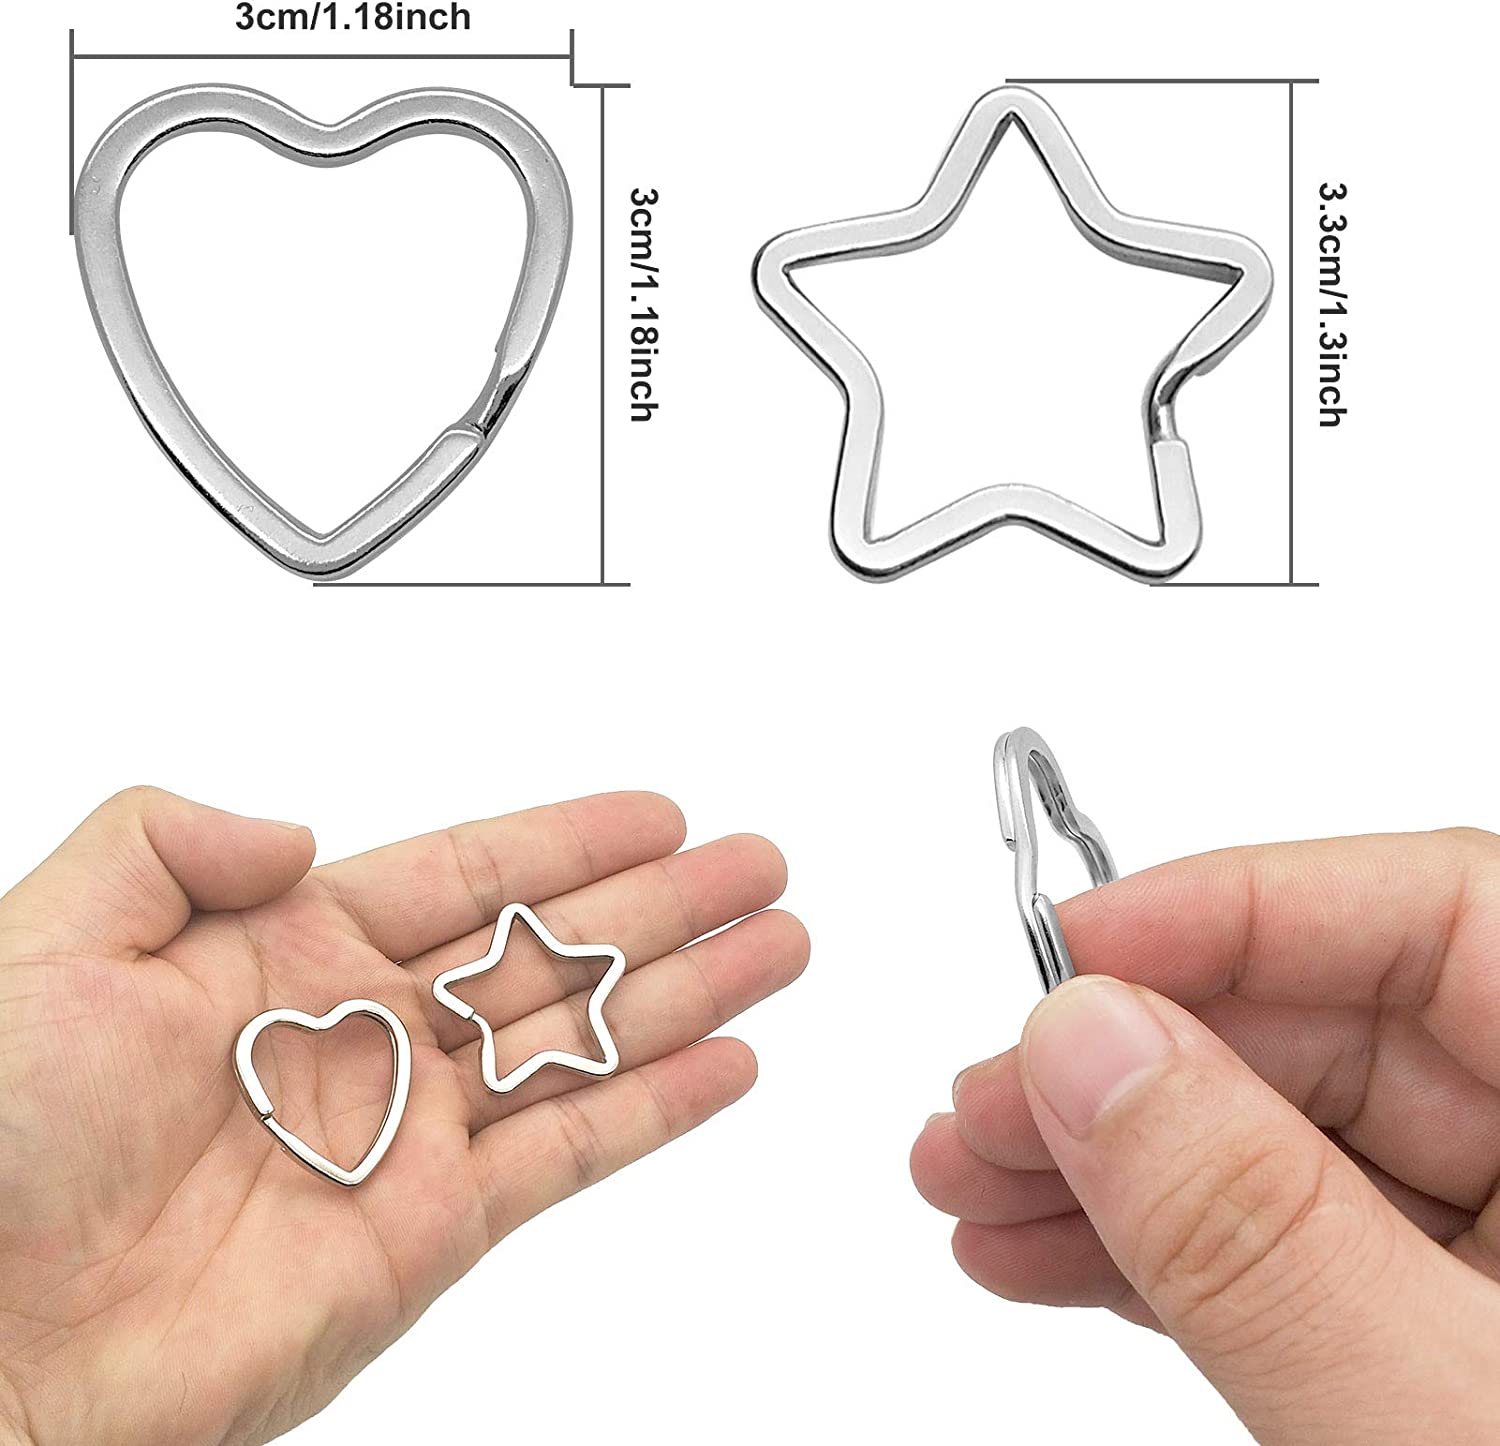 50pcs Star Shaped Split Key Rings for Craft,Heart Shaped Key Rings,Metal  Split Key Rings for Home Car/Keys DIY Keychain Bulk Crafts/Key Accessories